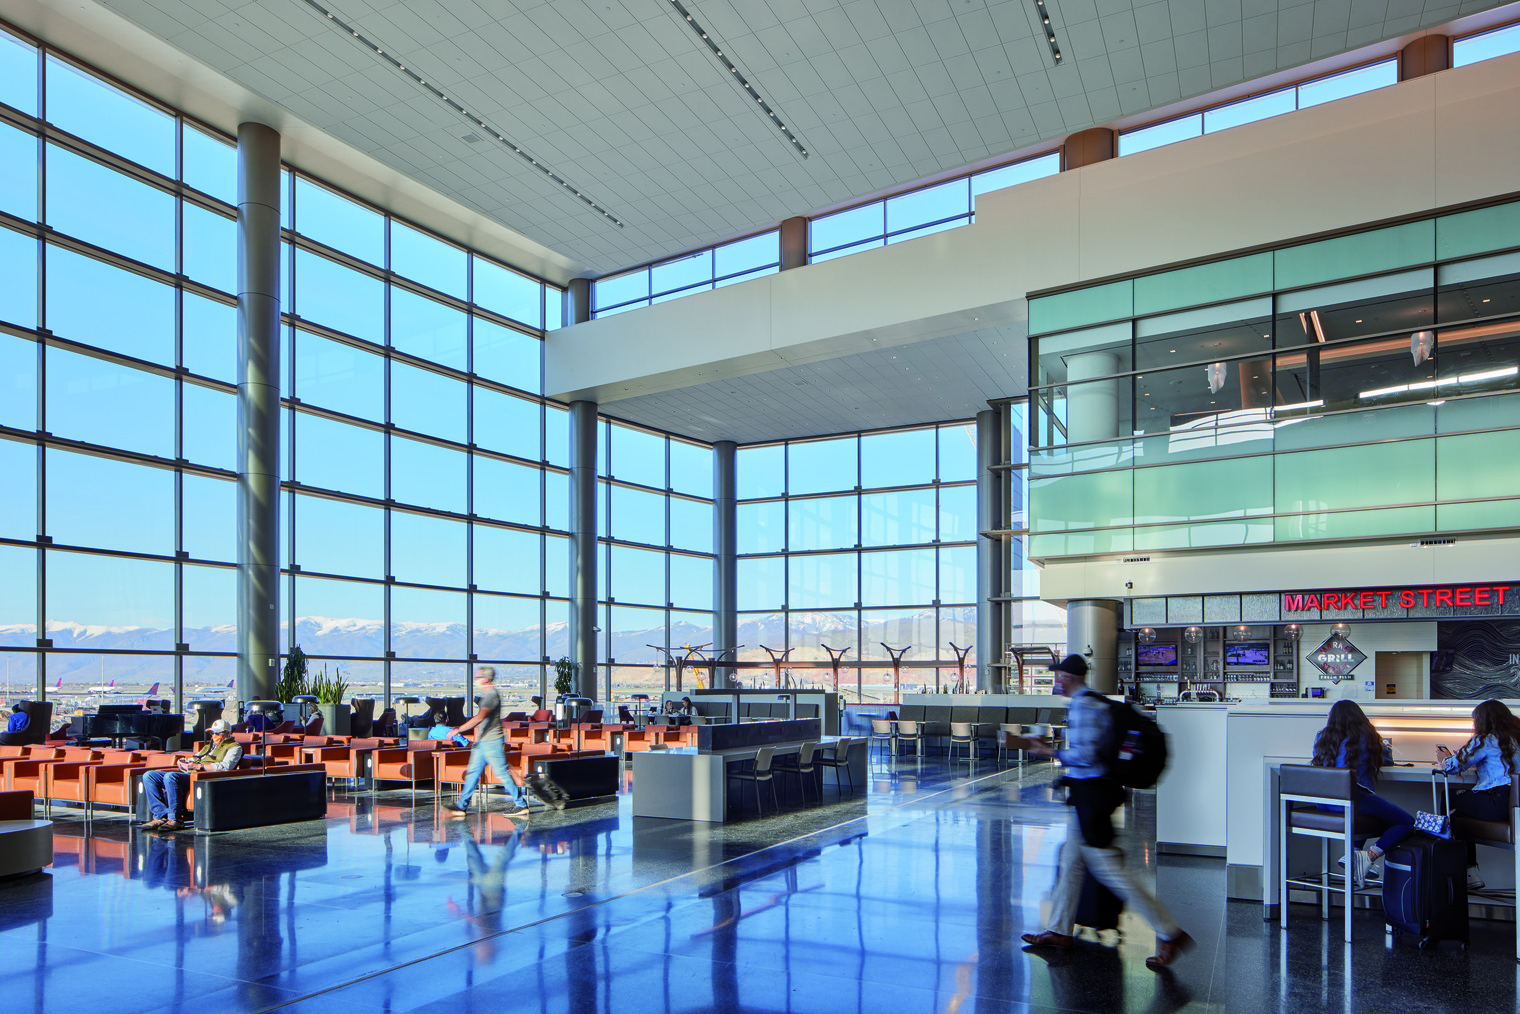 50-ft. Windows at Salt Lake City International Airport - Bruce Damonte Photography